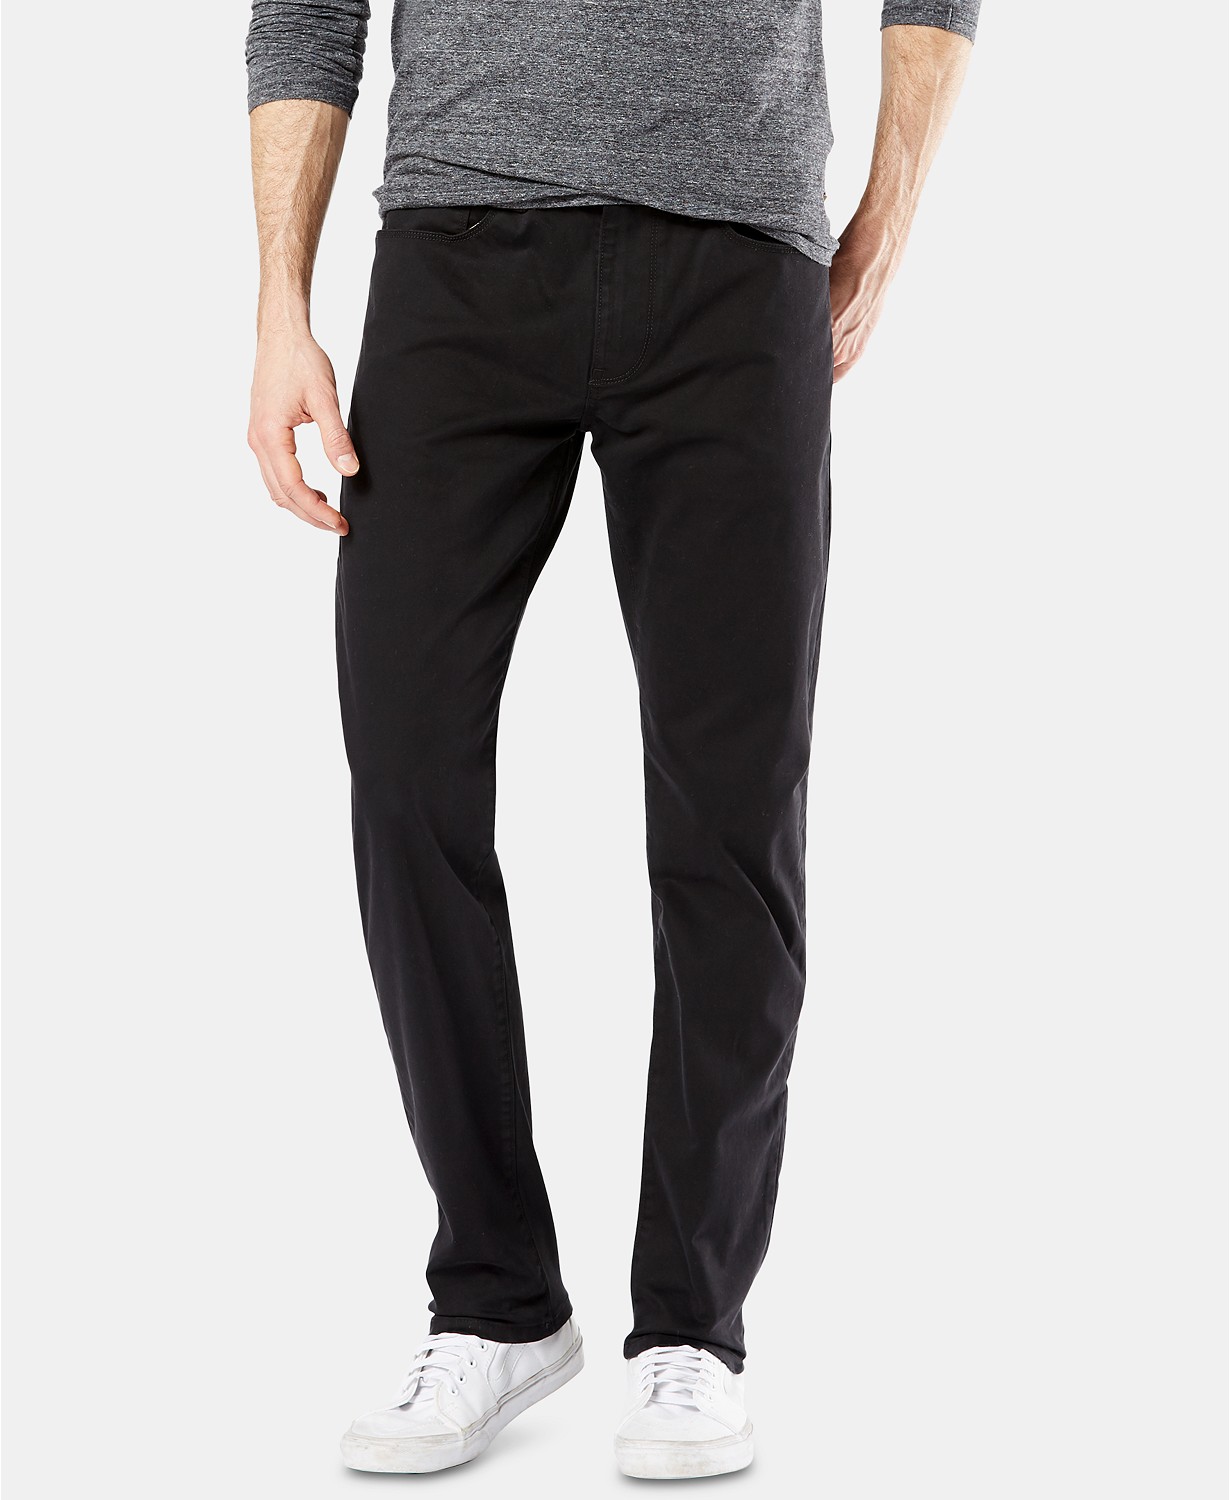 Dockers Mens Jean-cut Supreme Flex Slim Fit Pants Size 34W X 29 | eBay